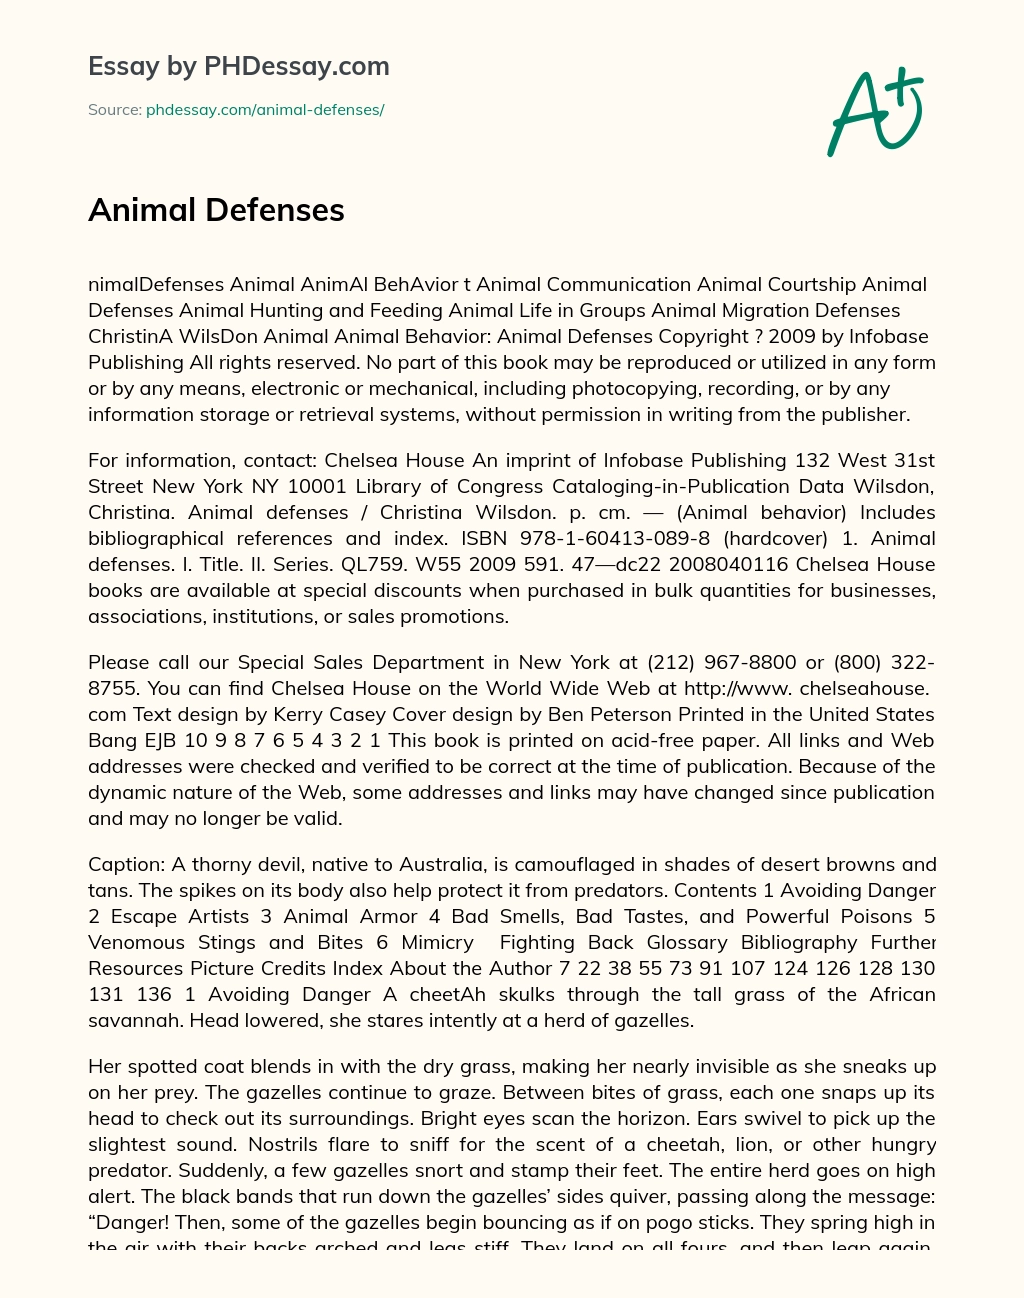 Animal Defenses essay